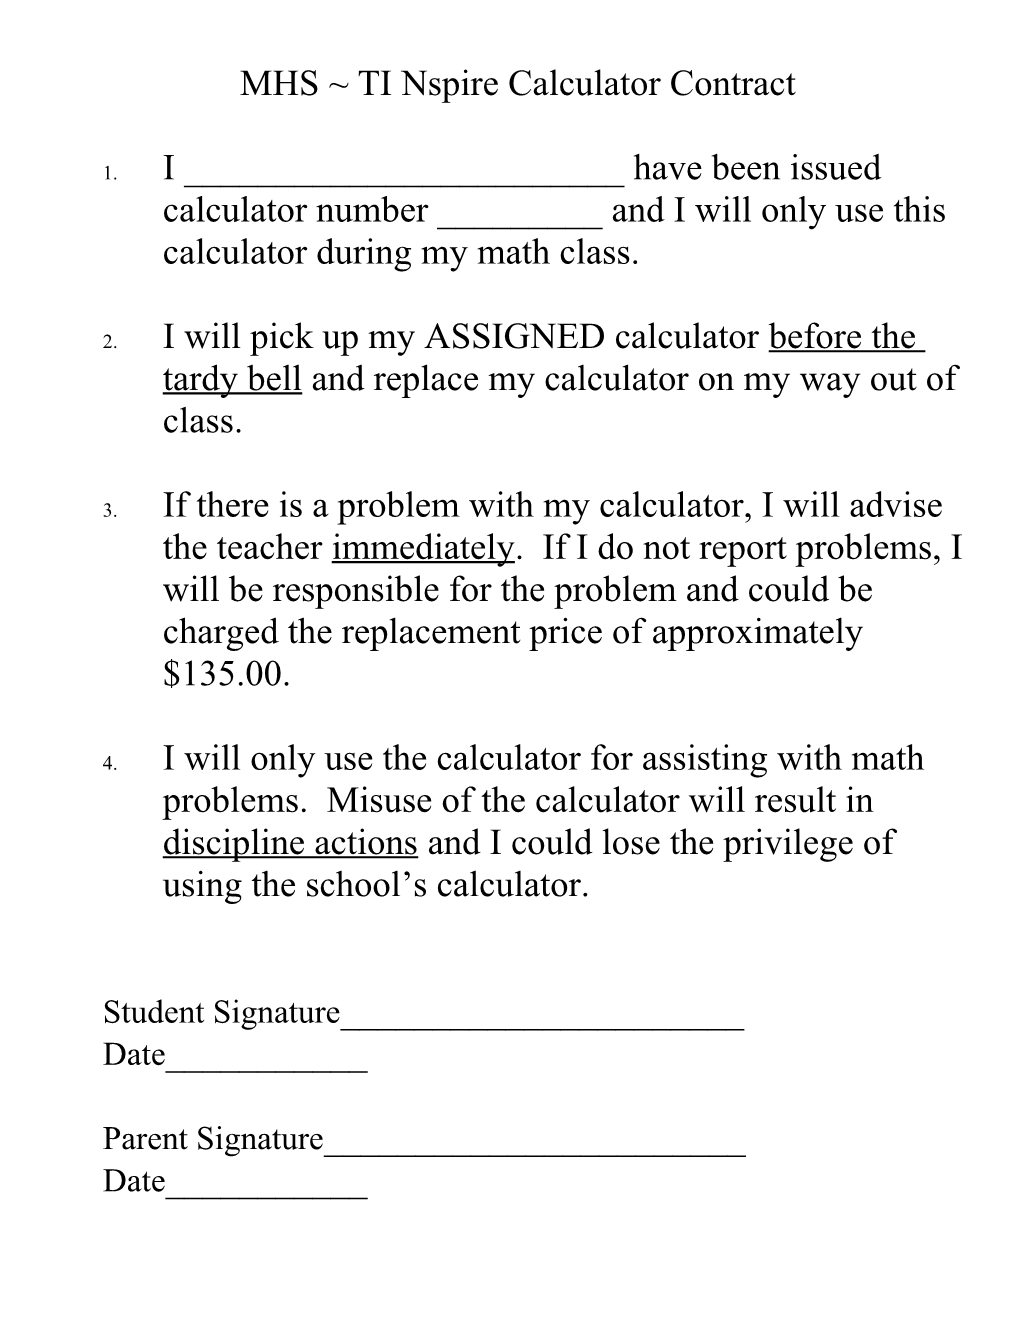 FHS TI 83 Calculator Contract